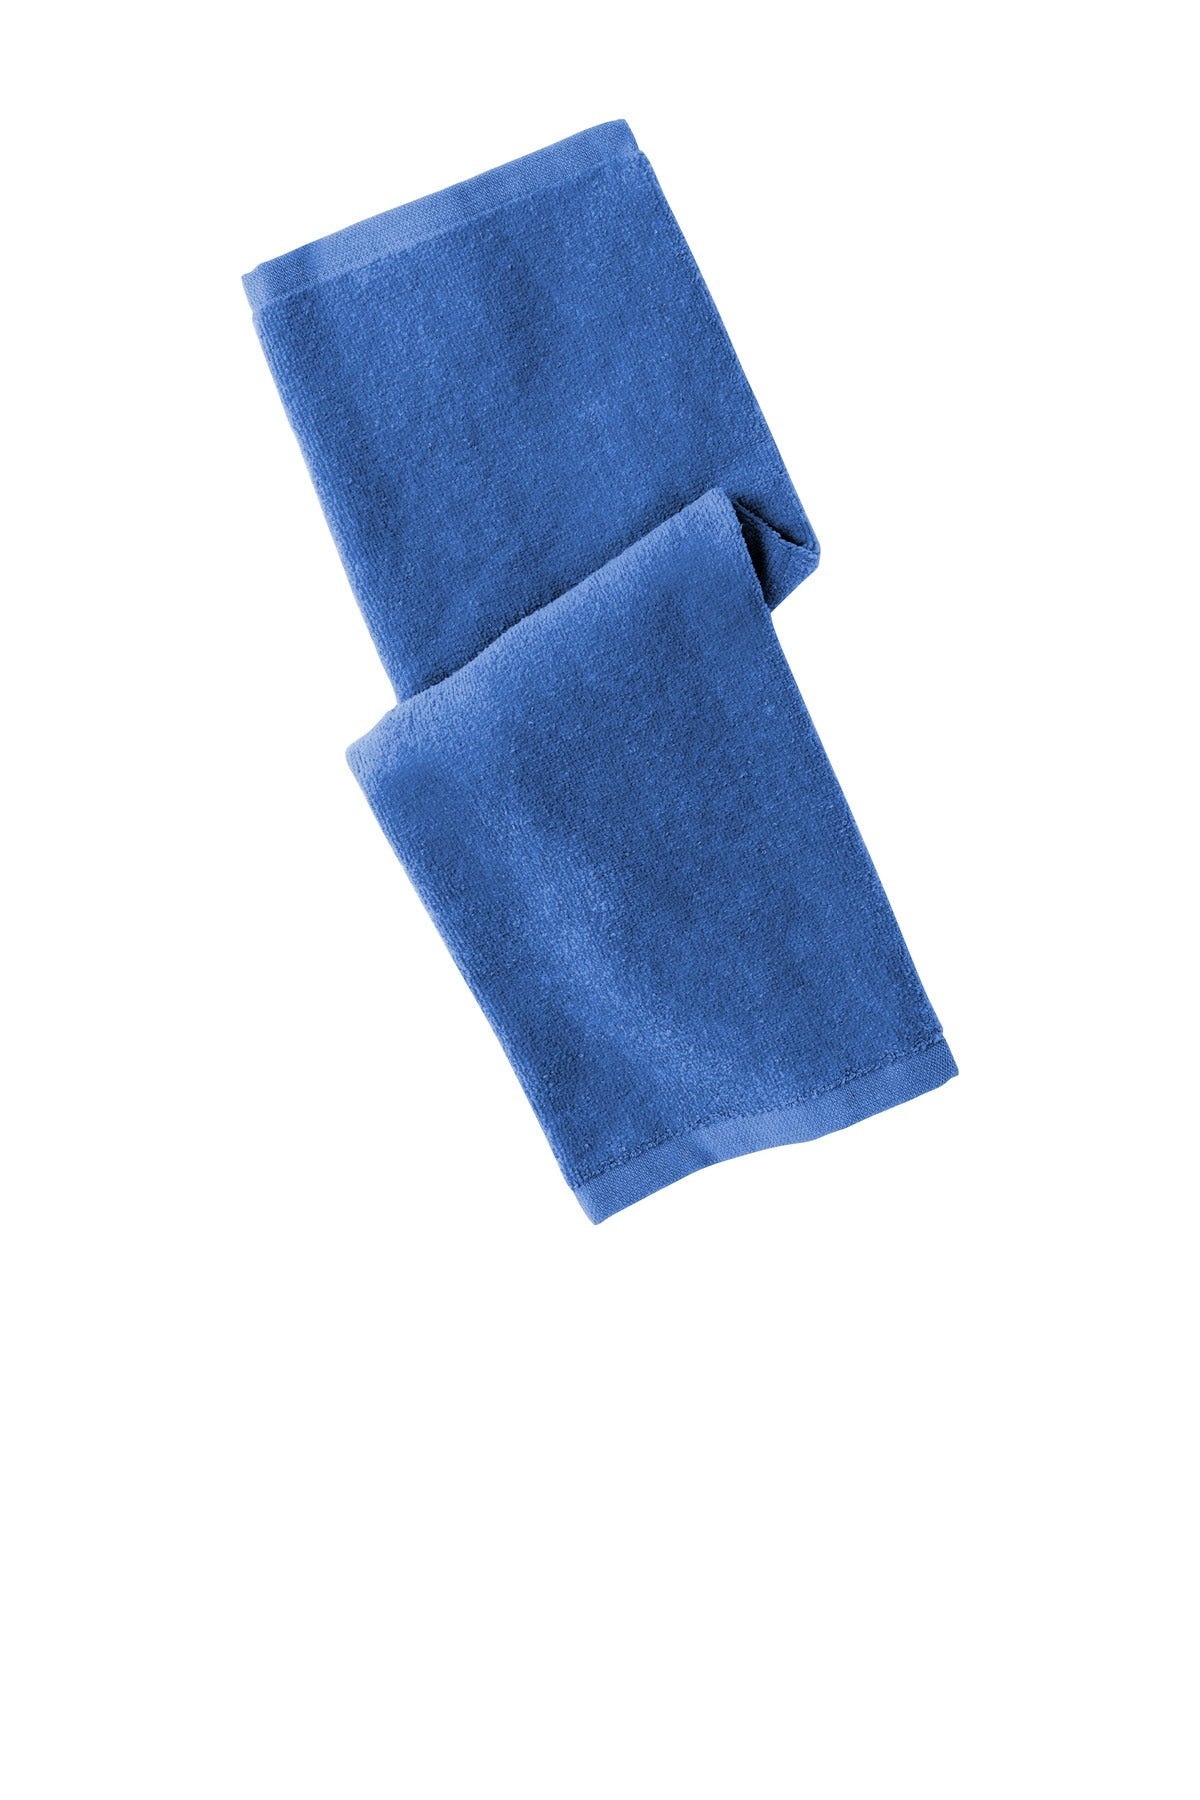 Port Authority ® Hemmed Towel PT390 - DFW Impression